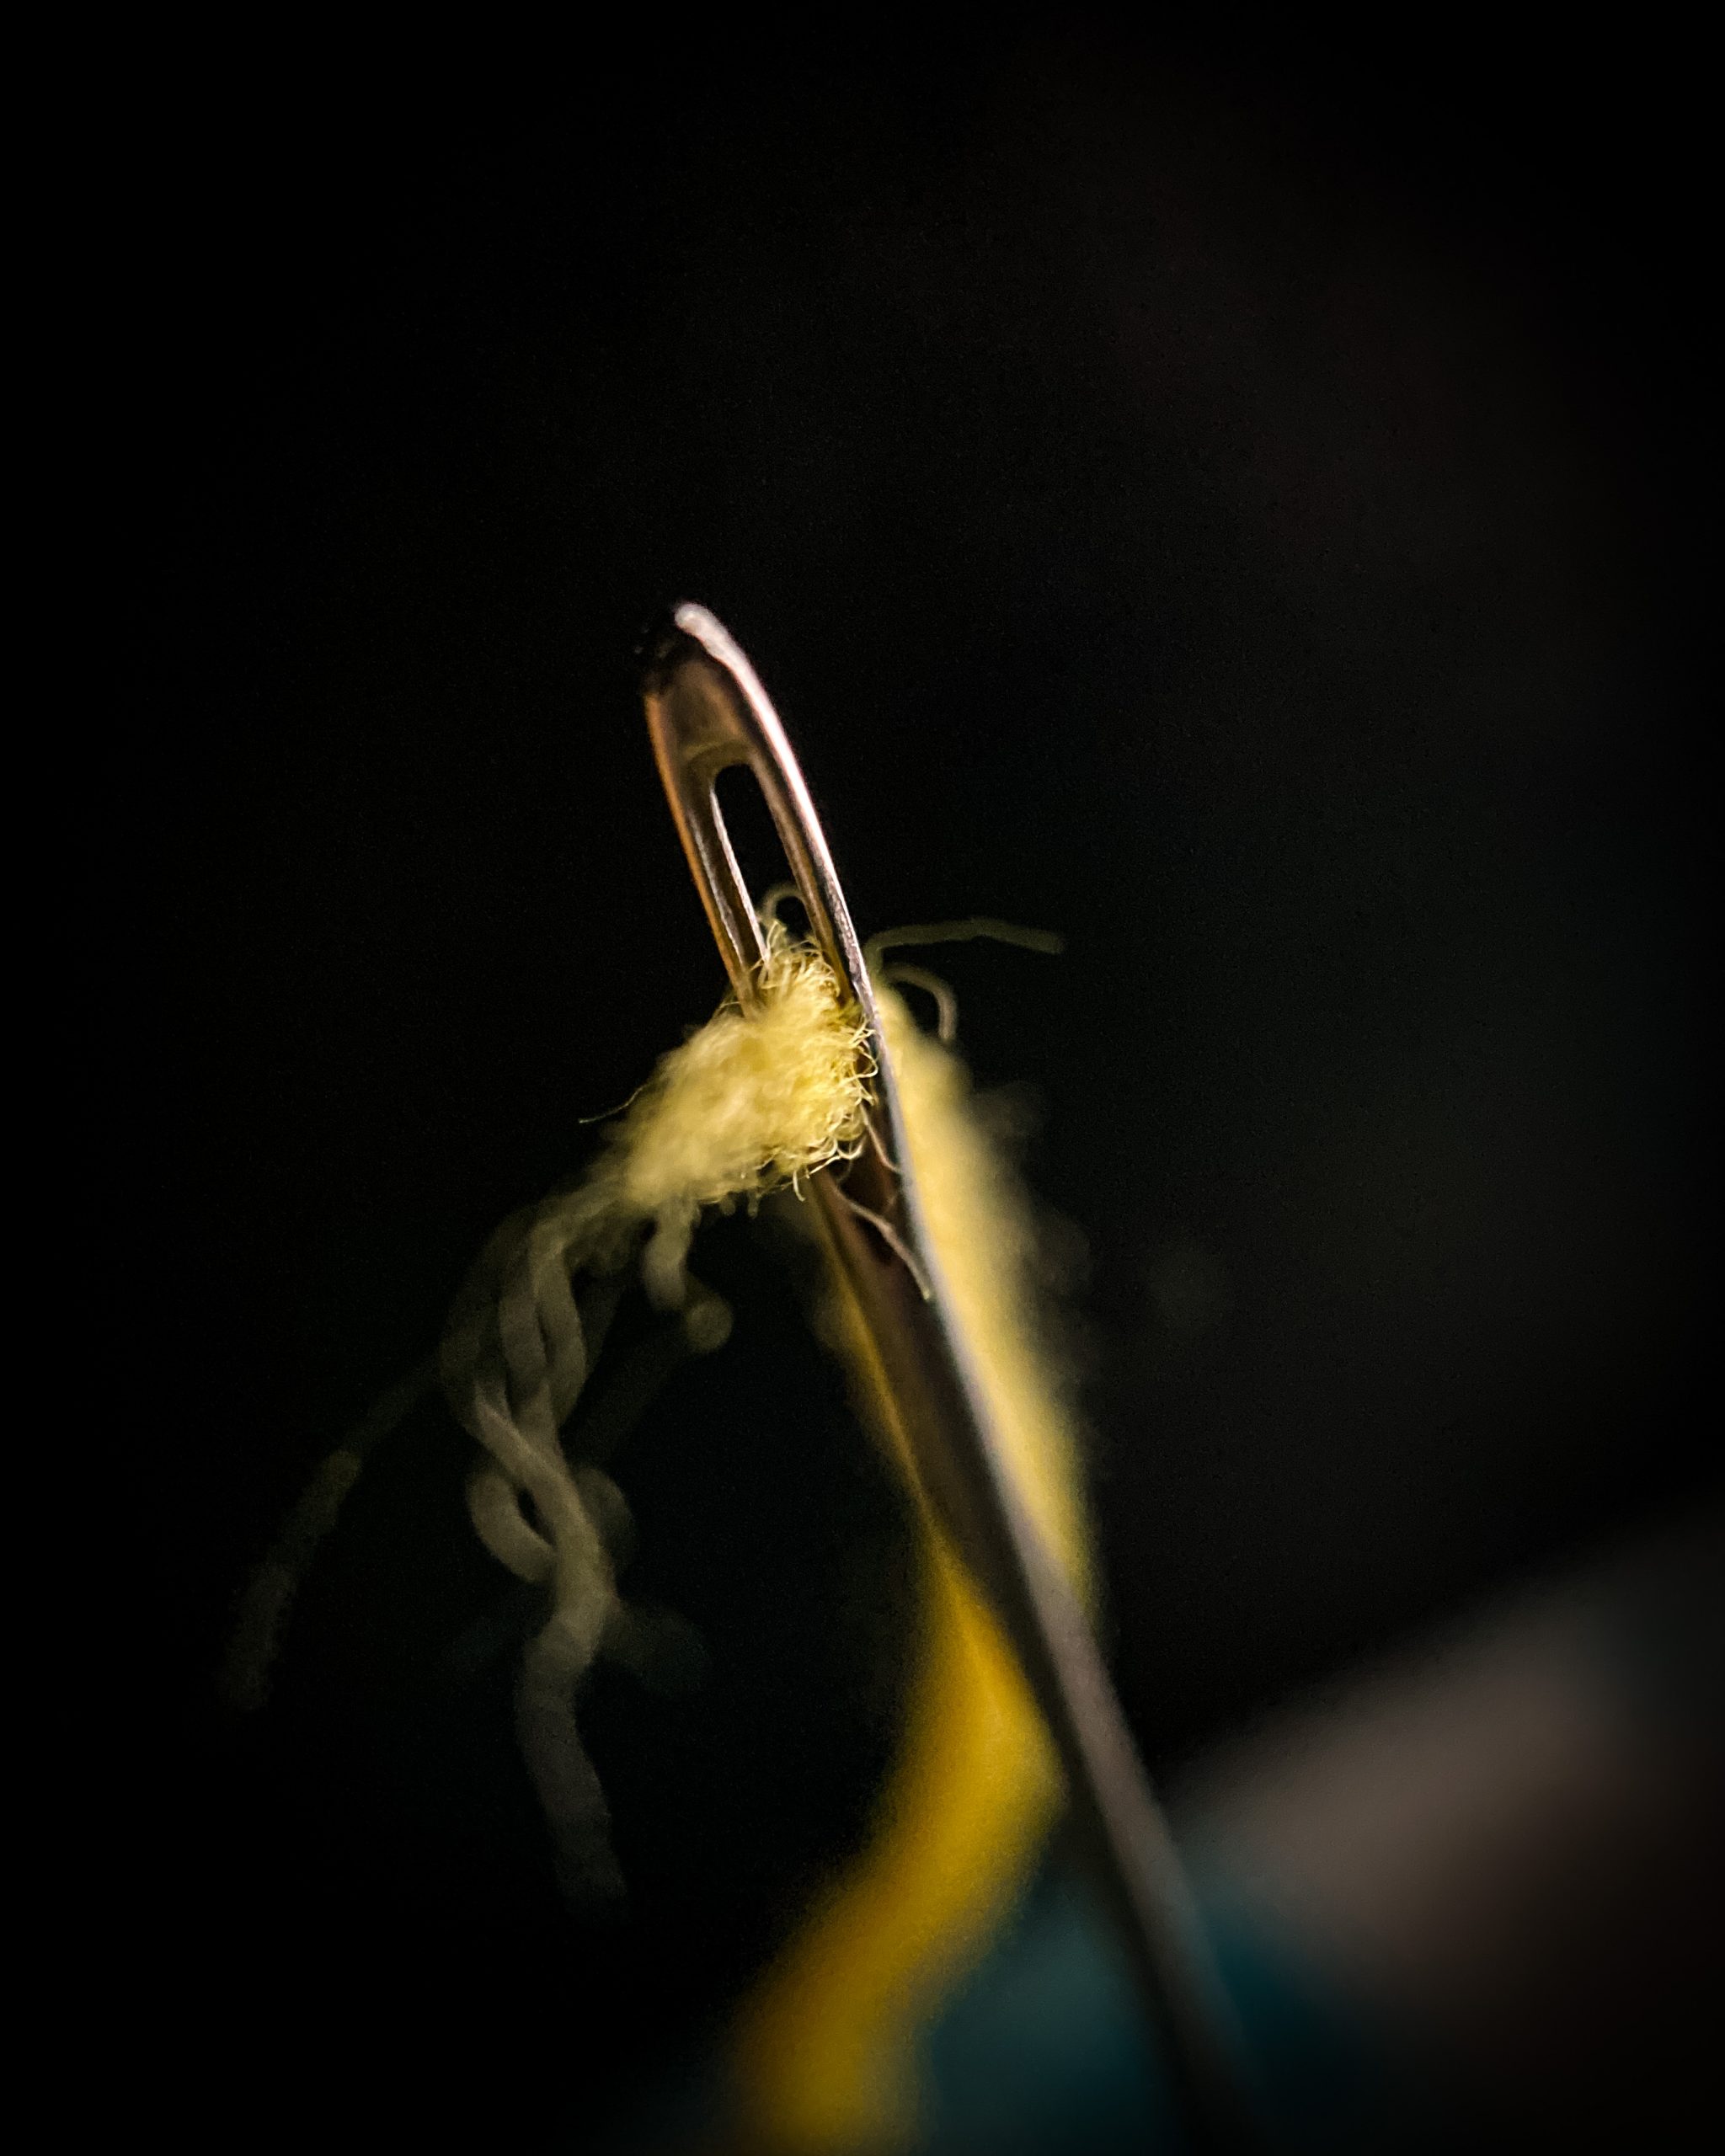 Thread inside needle